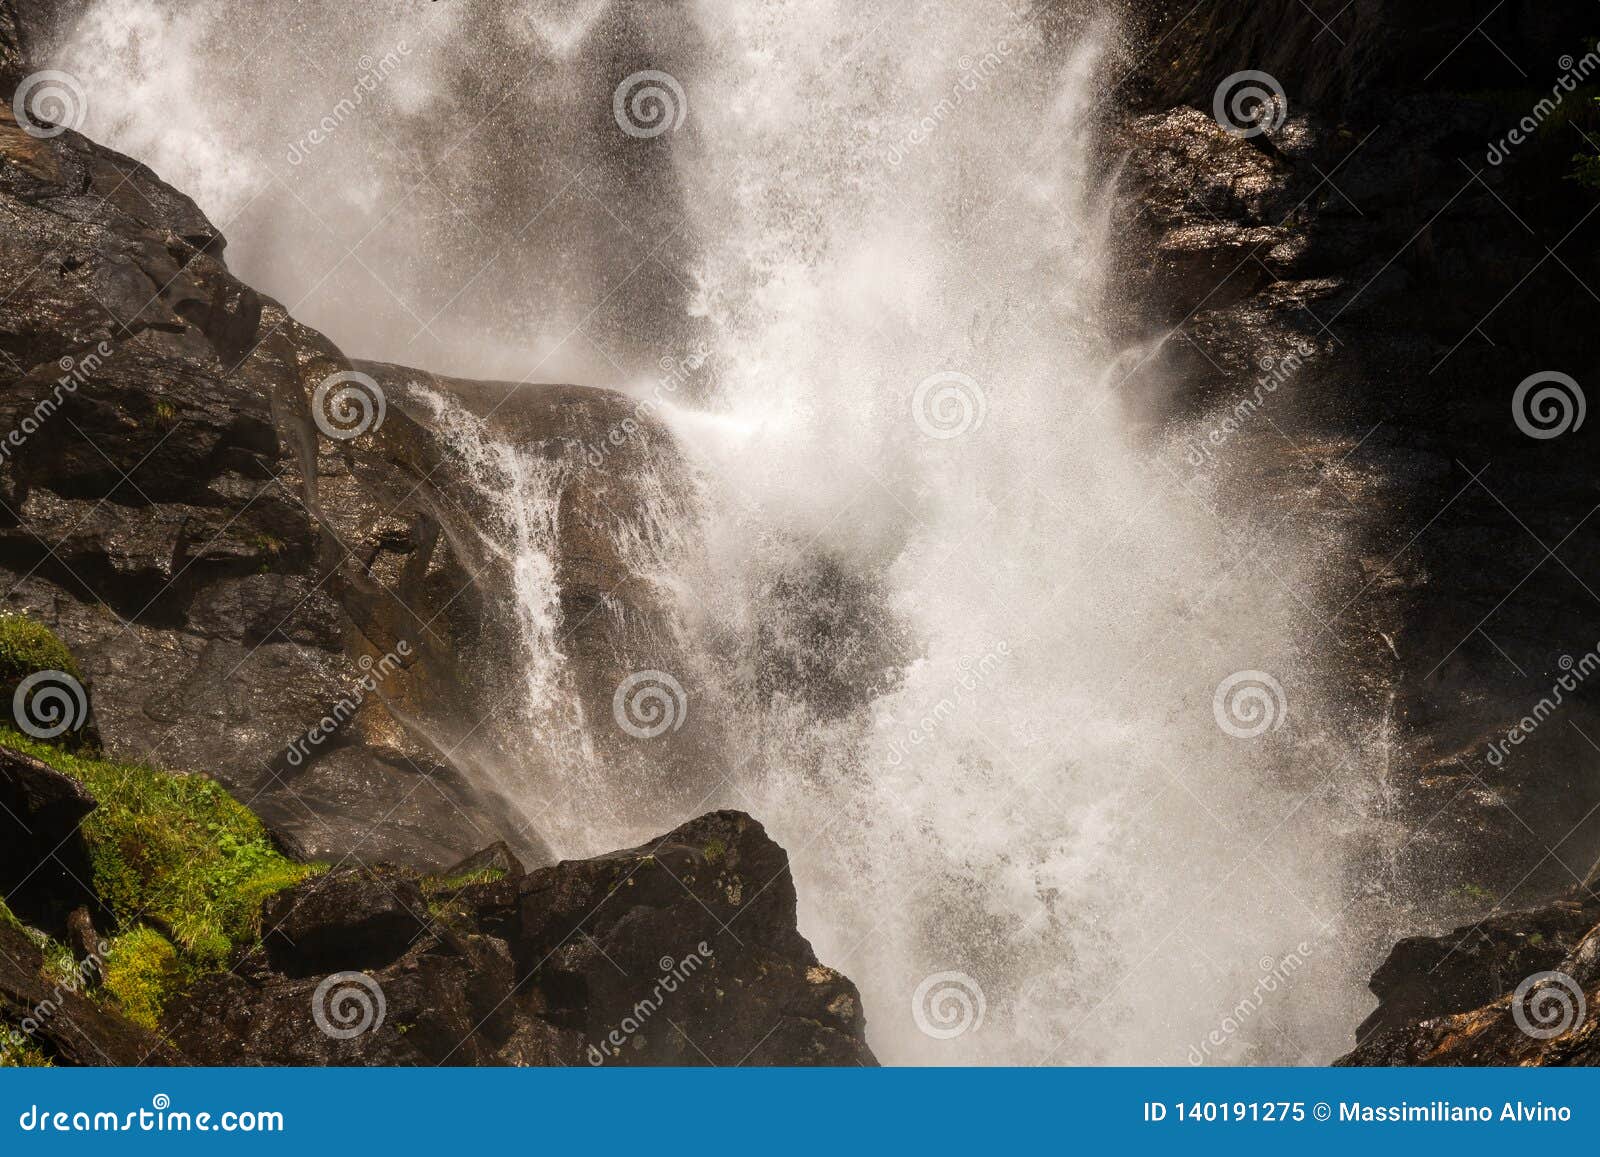 Beautiful Waterfall In A Wood On The Italian Dolomites Stock Image